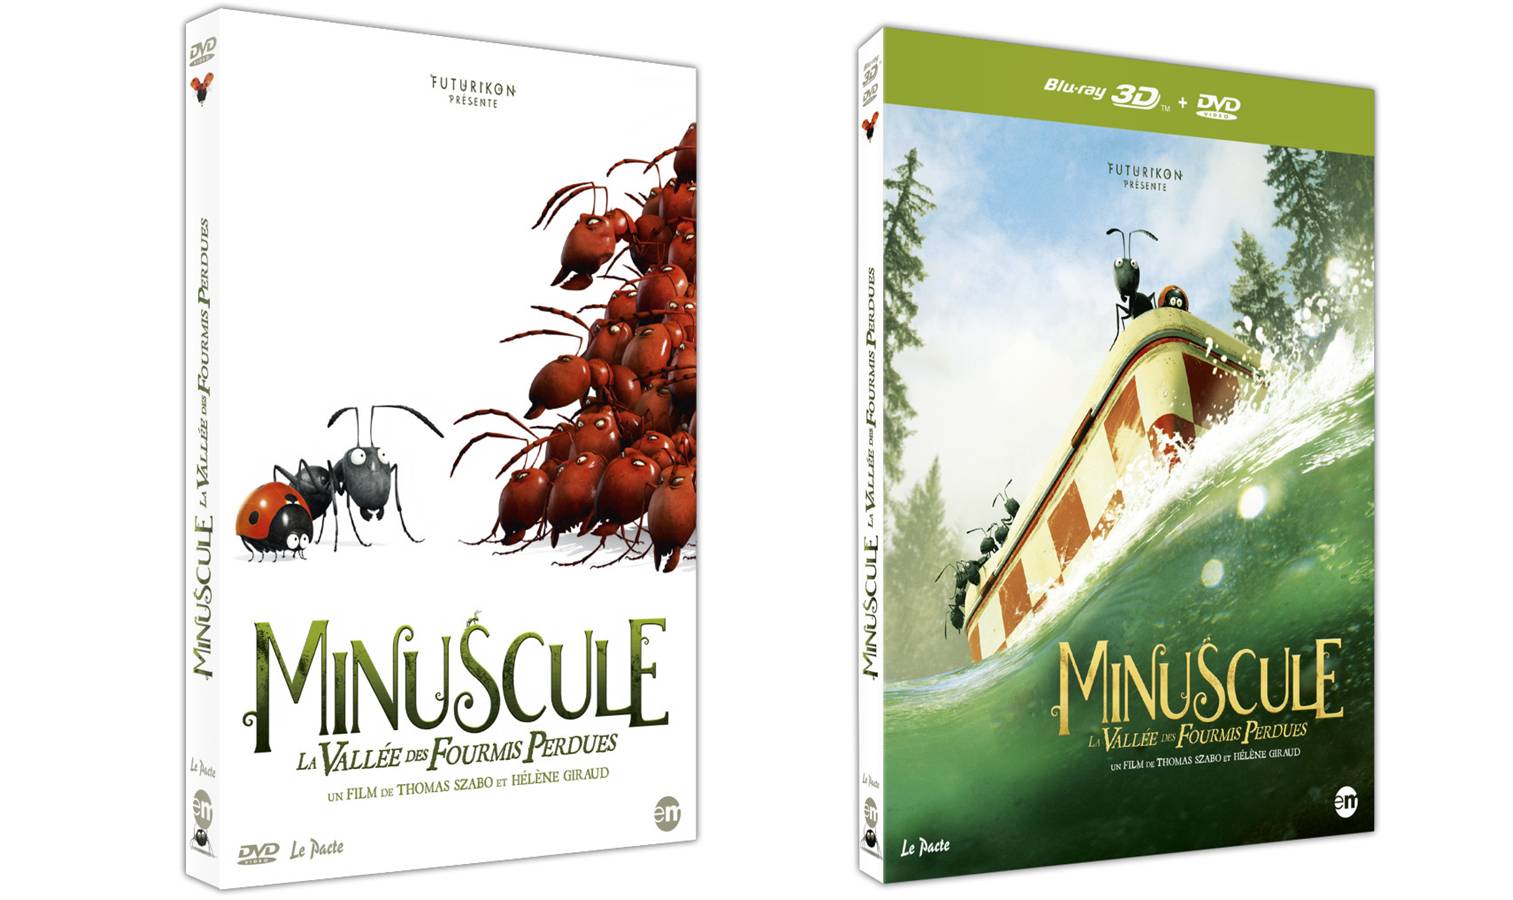 MINUSCULE - film animation en DVD Bluray fourmis éditions Montparnasse - Go with the Blog